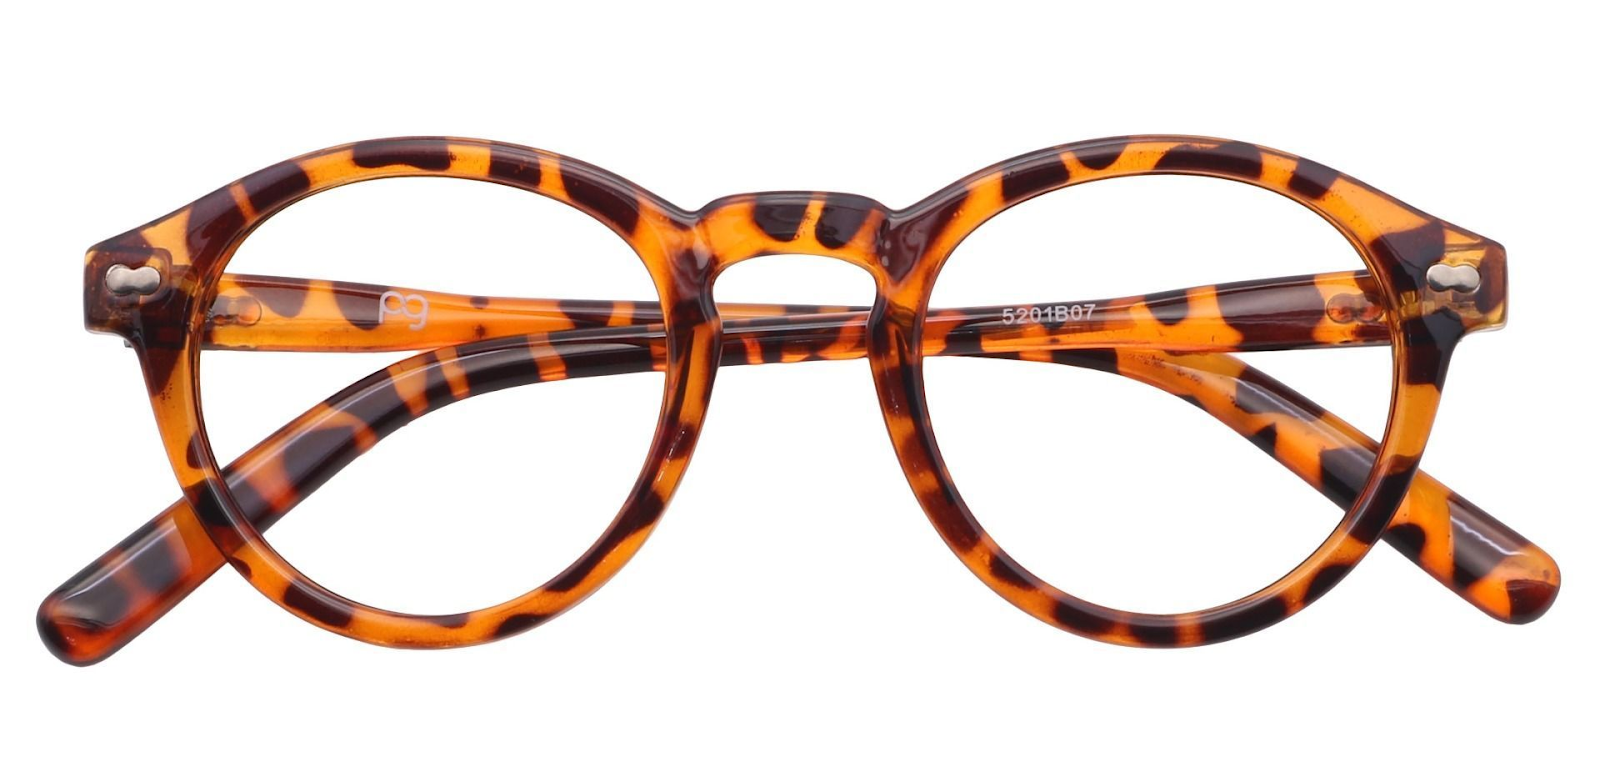 A pair of Vee Round tortoiseshell-print glasses.